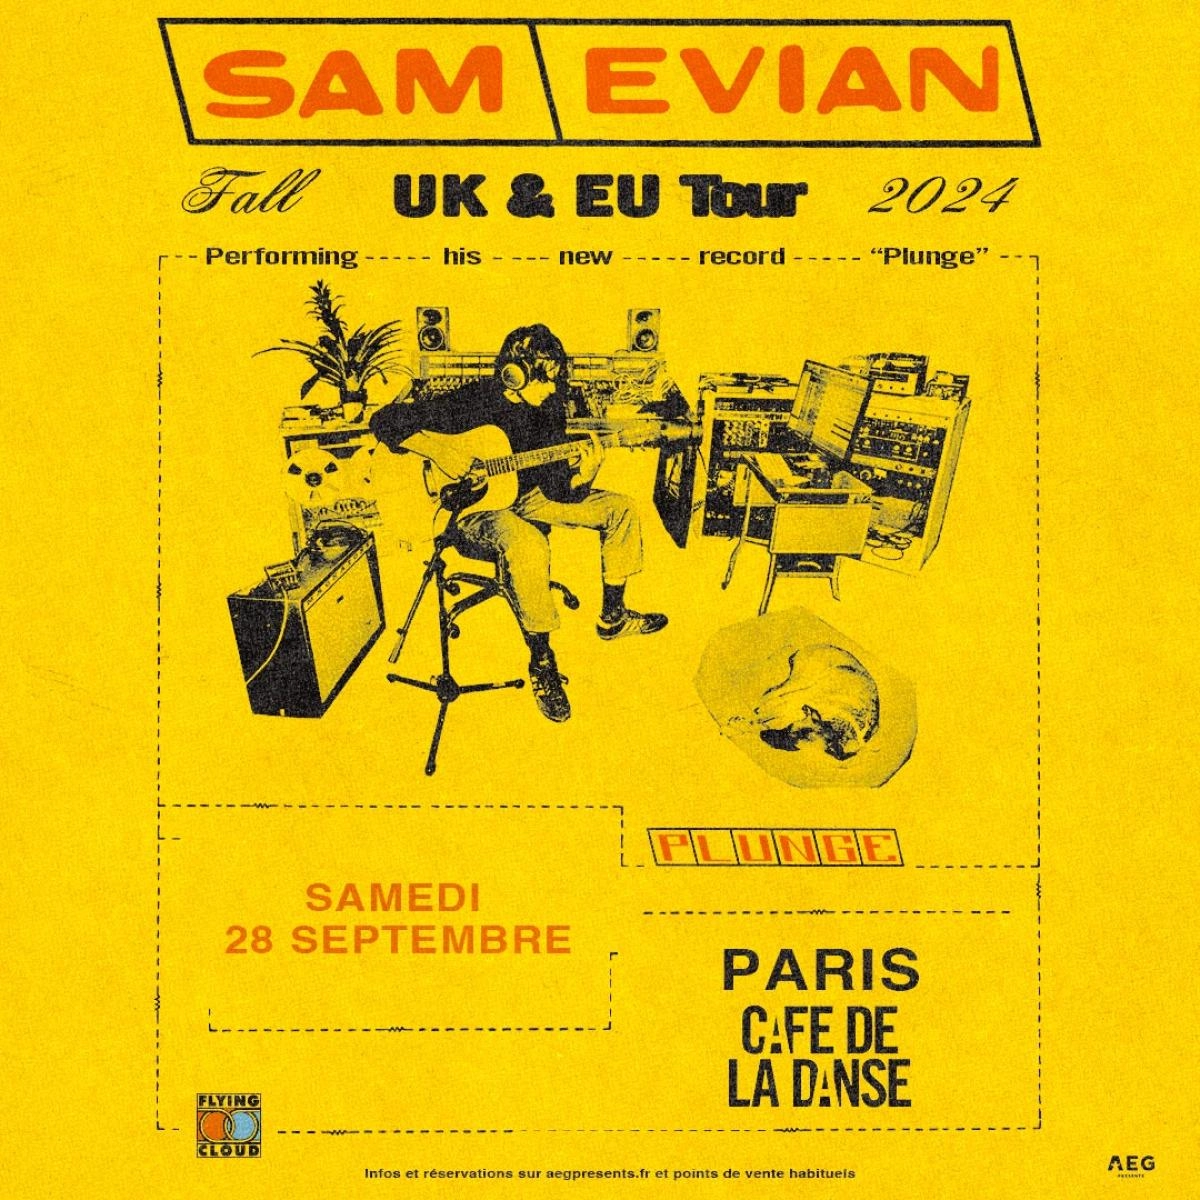 Sam Evian at Cafe De la Danse Tickets